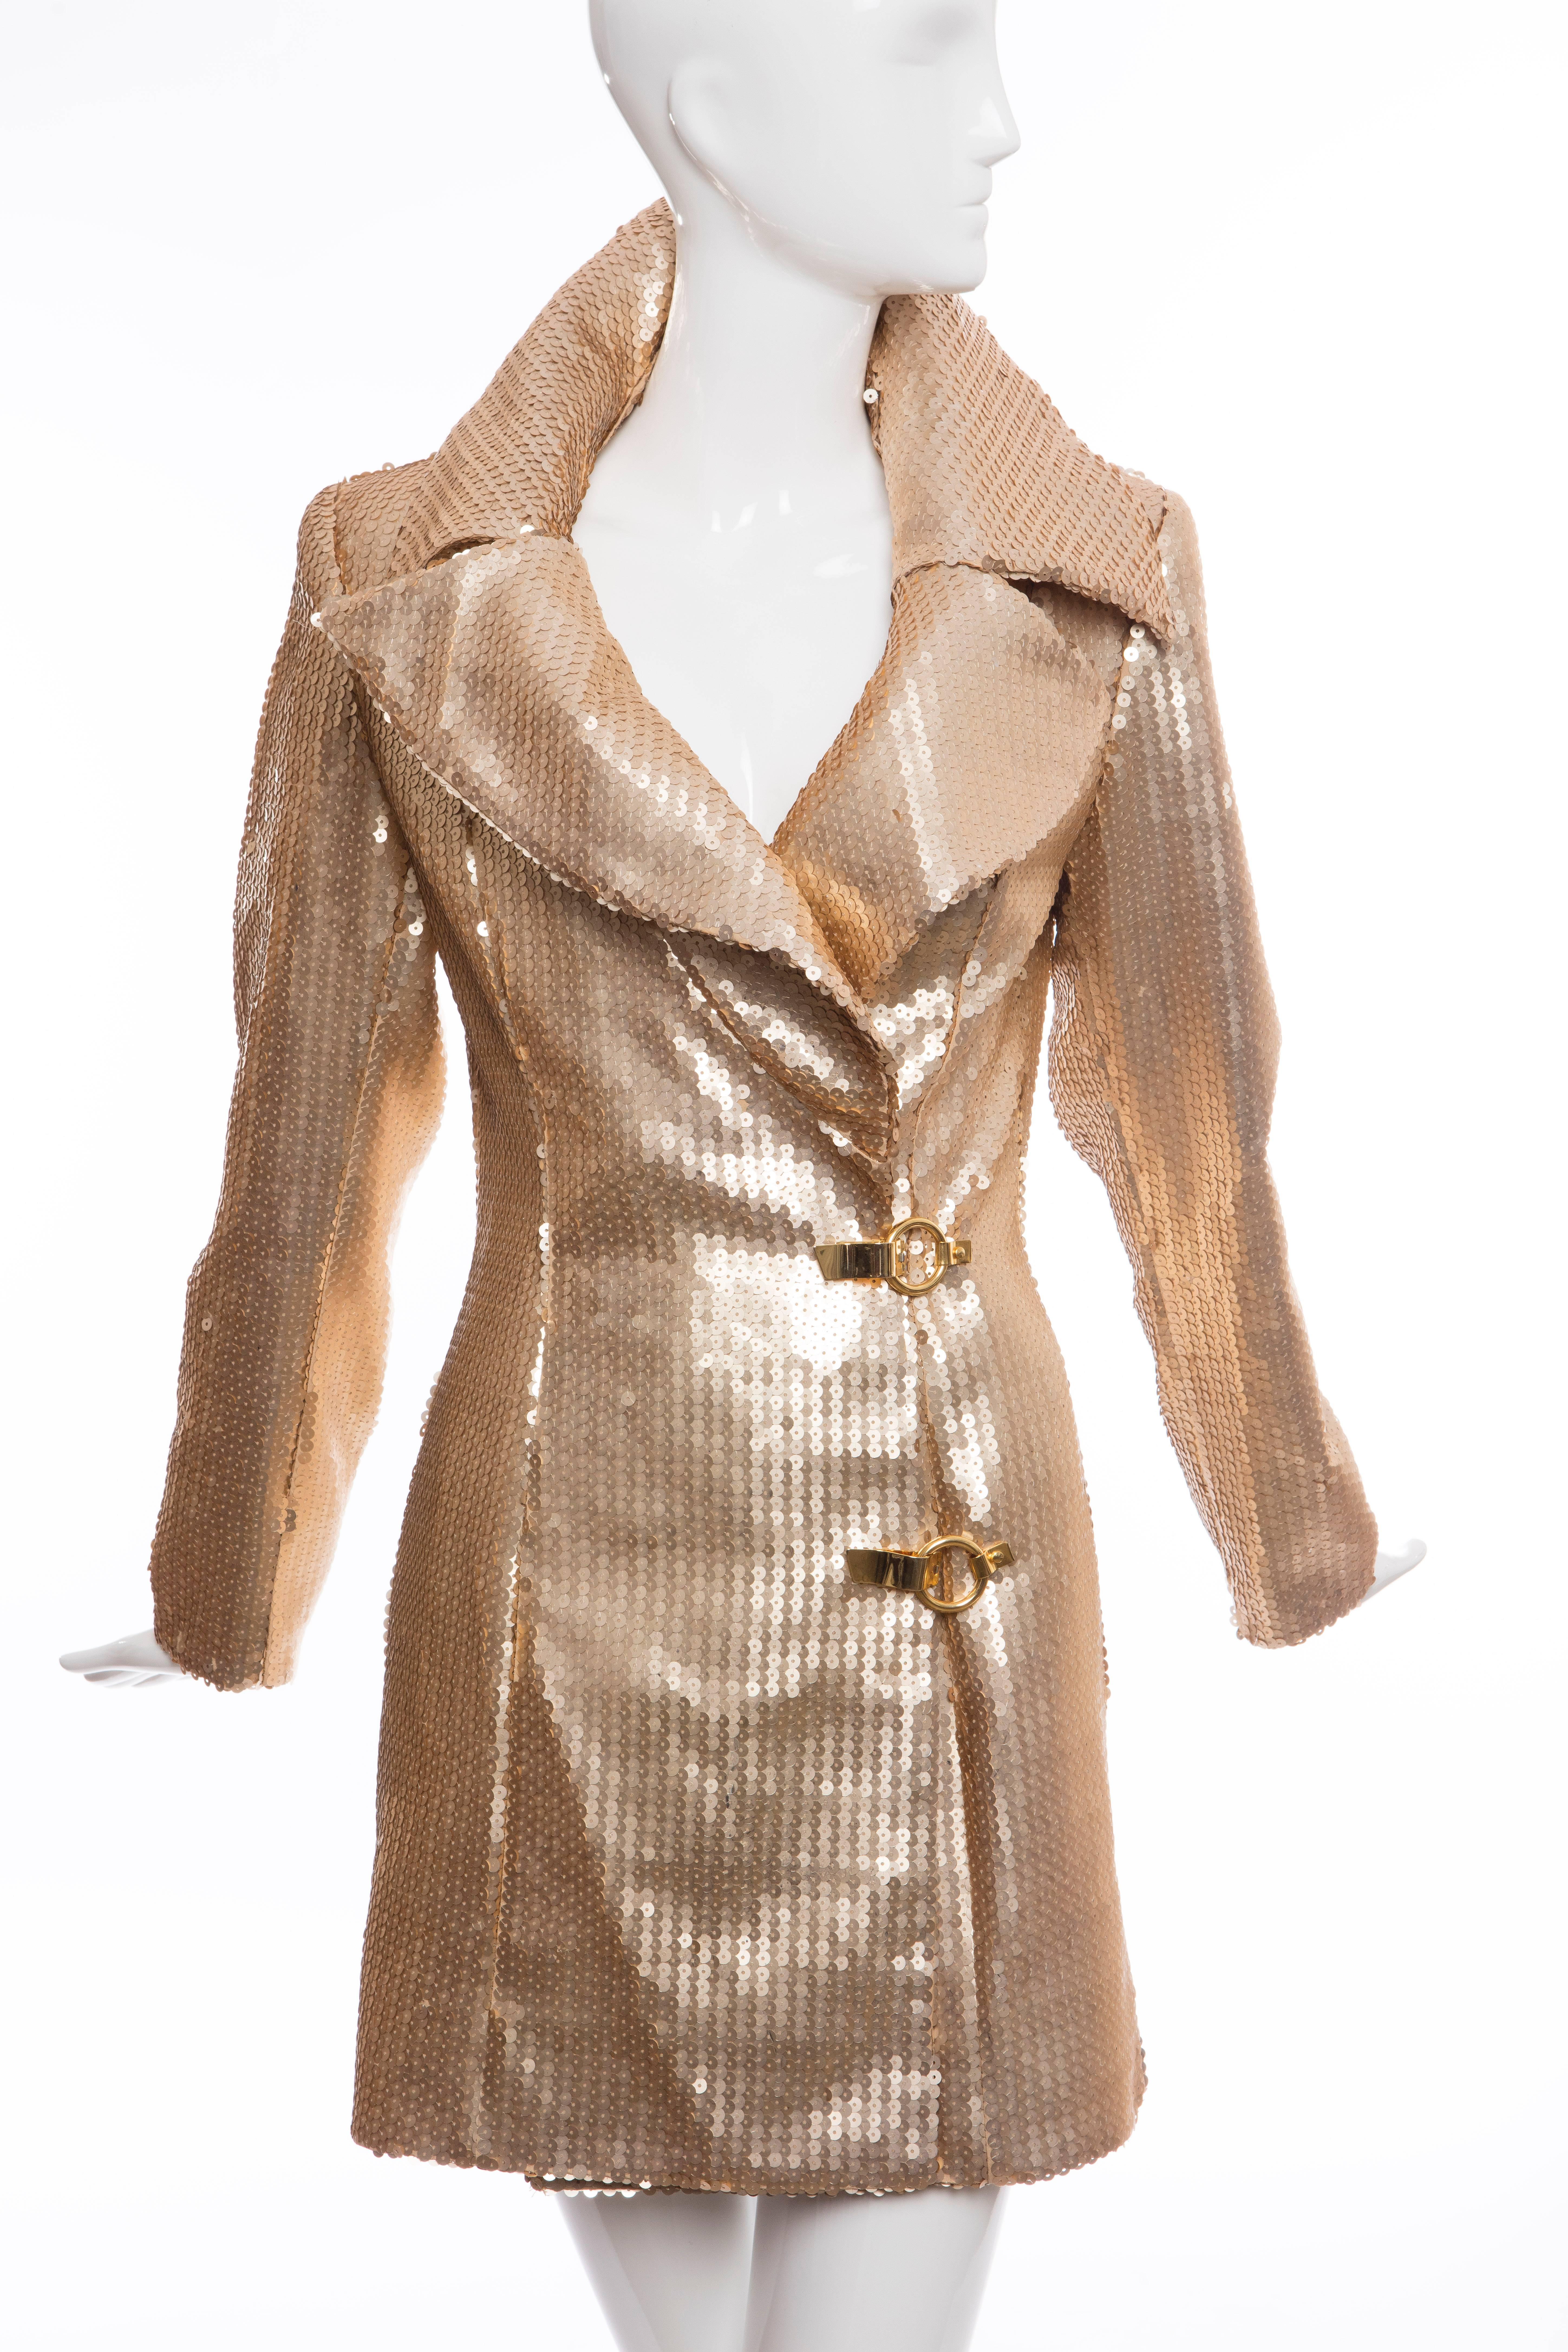 Women's Claude Montana Matte Gold Sequin Jacket, Circa: 1980's